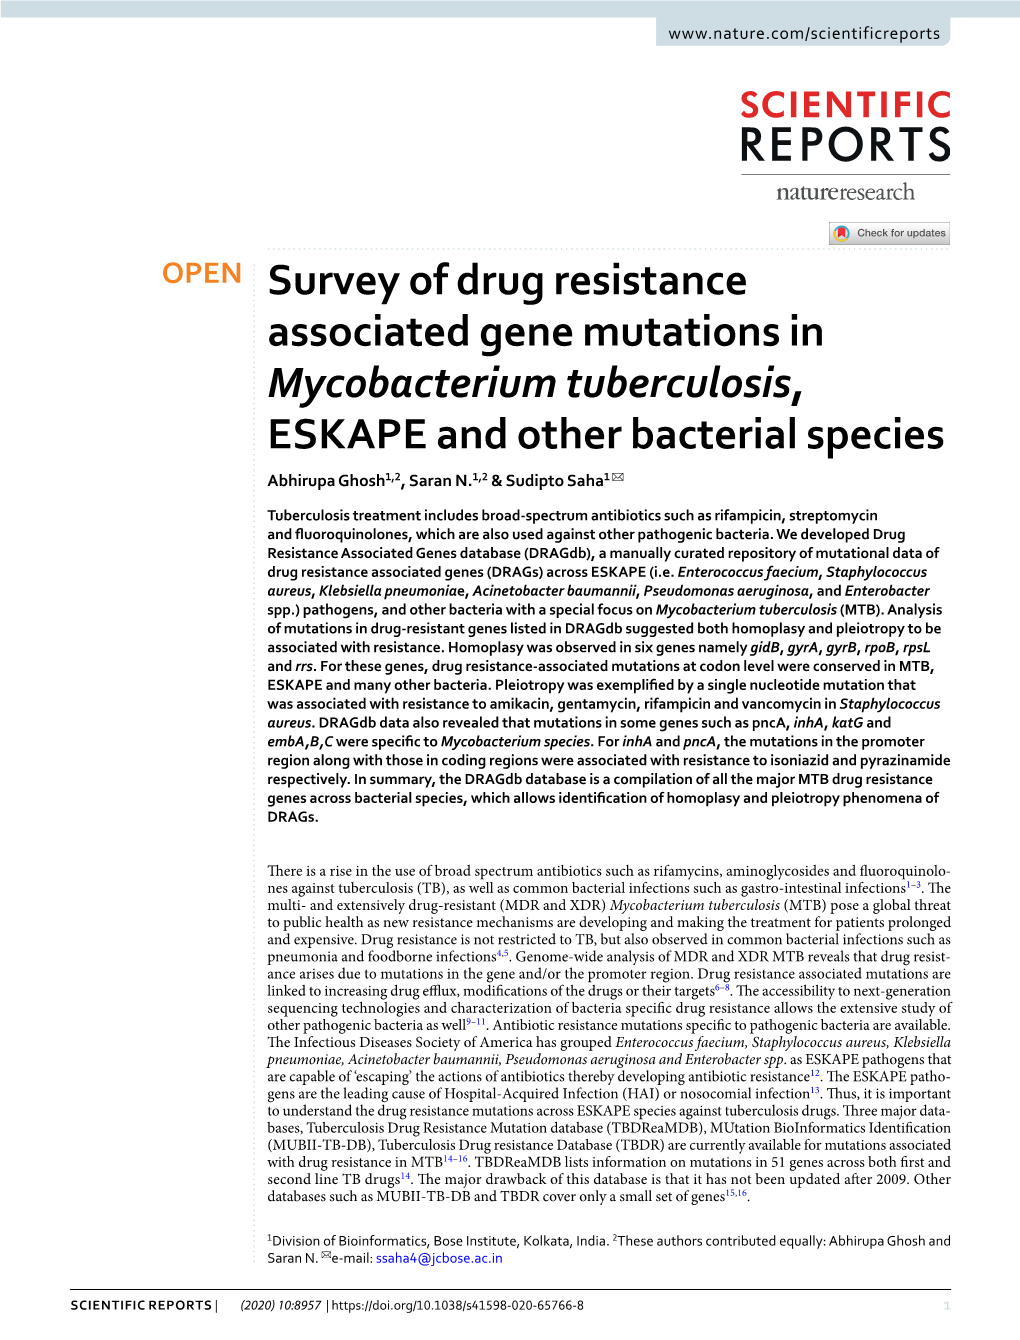 Survey of Drug Resistance Associated Gene Mutations in Mycobacterium Tuberculosis, ESKAPE and Other Bacterial Species Abhirupa Ghosh1,2, Saran N.1,2 & Sudipto Saha1 ✉